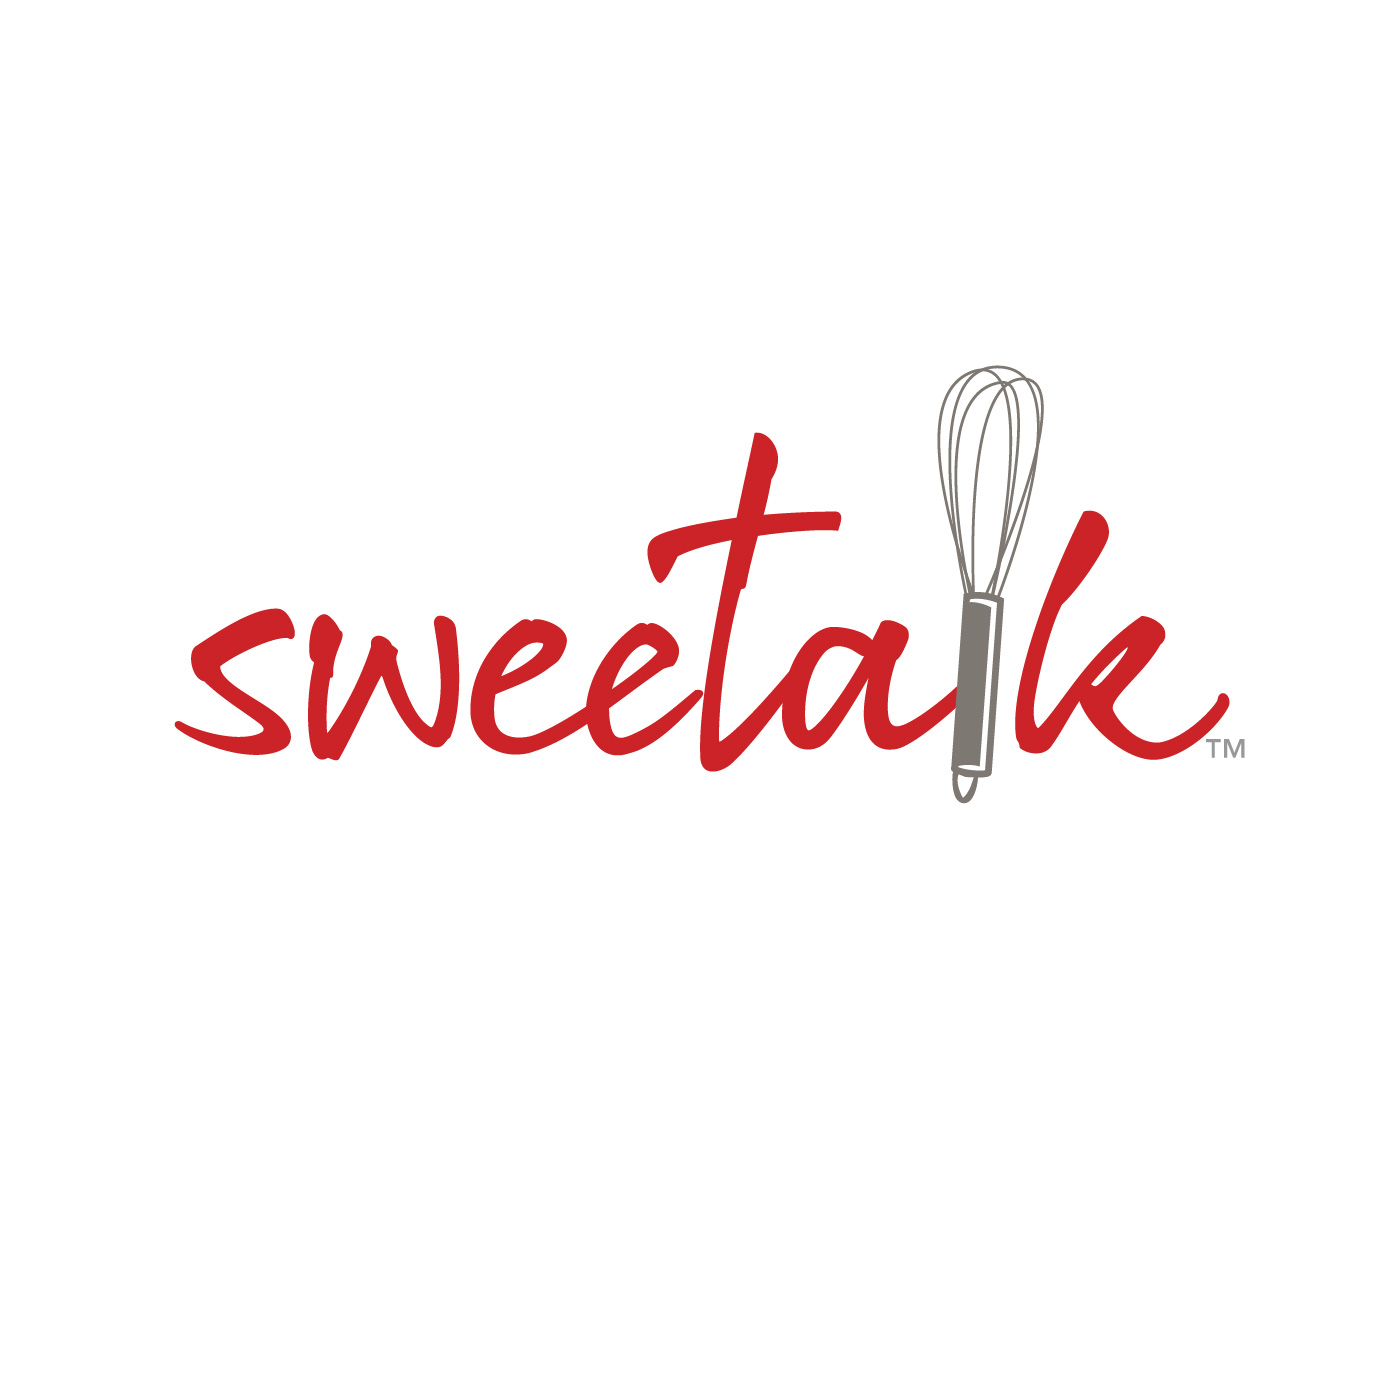 Sweetalk logo